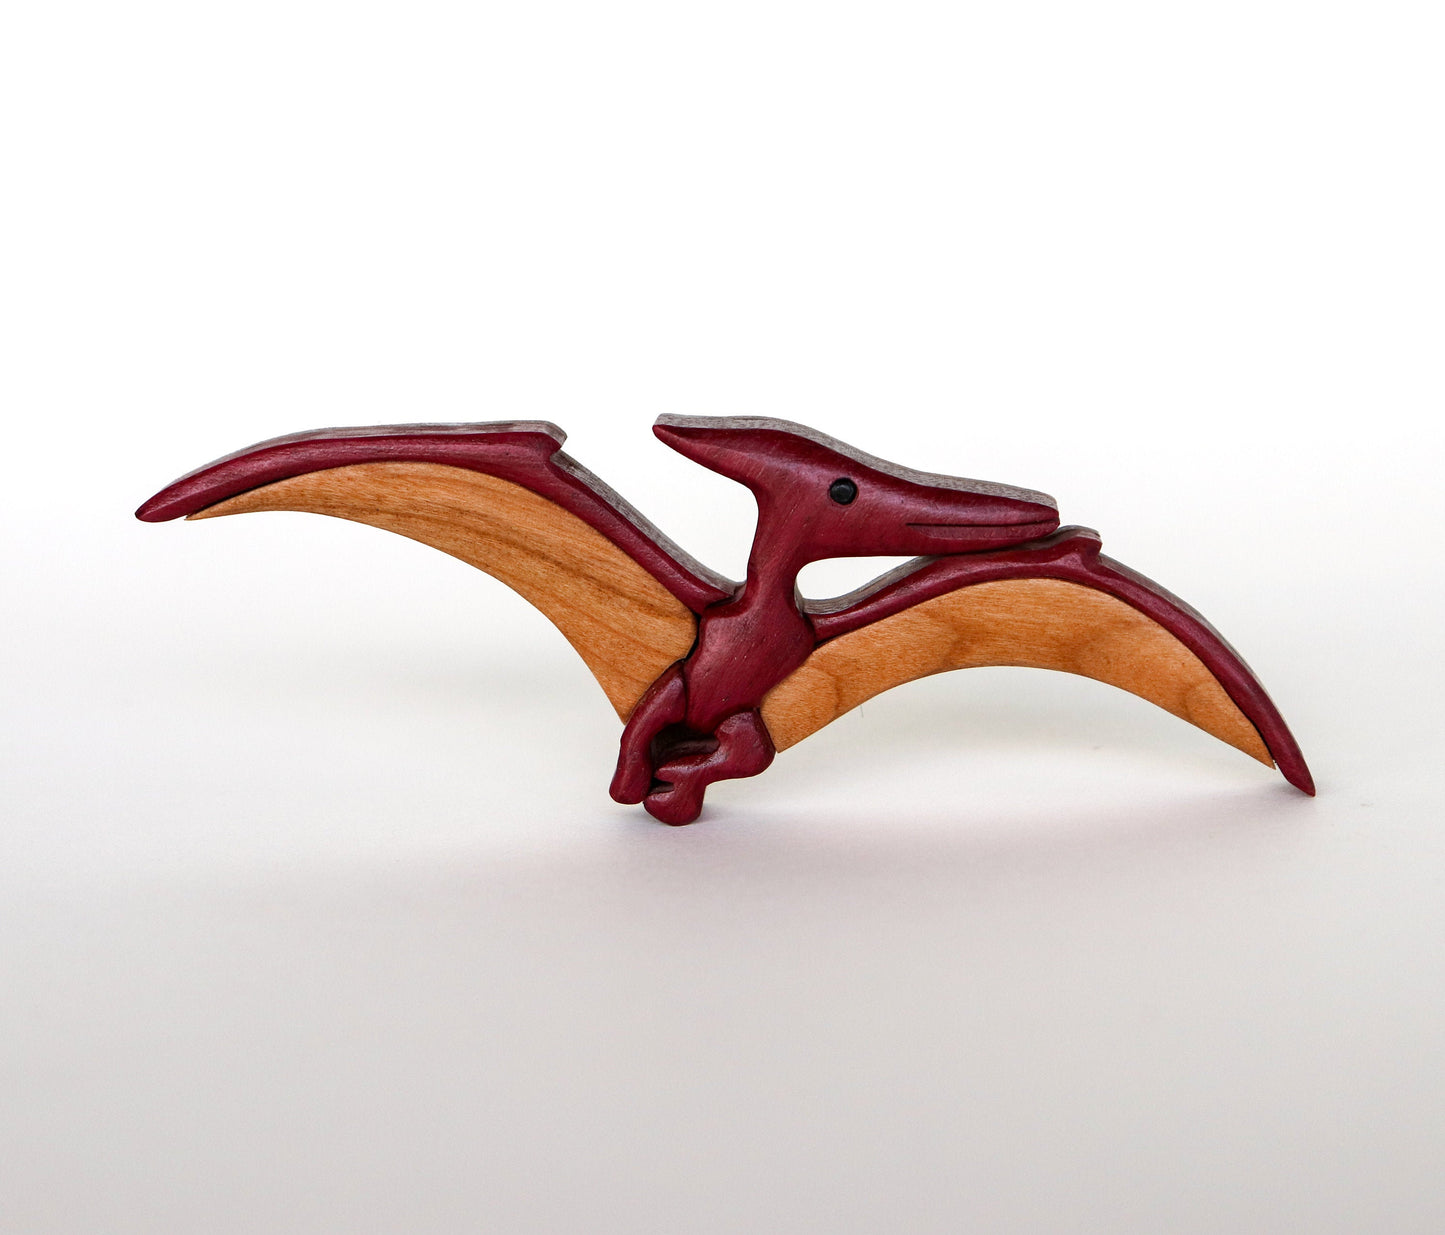 Pterodactyl Dinosaur Magnet / Ornament